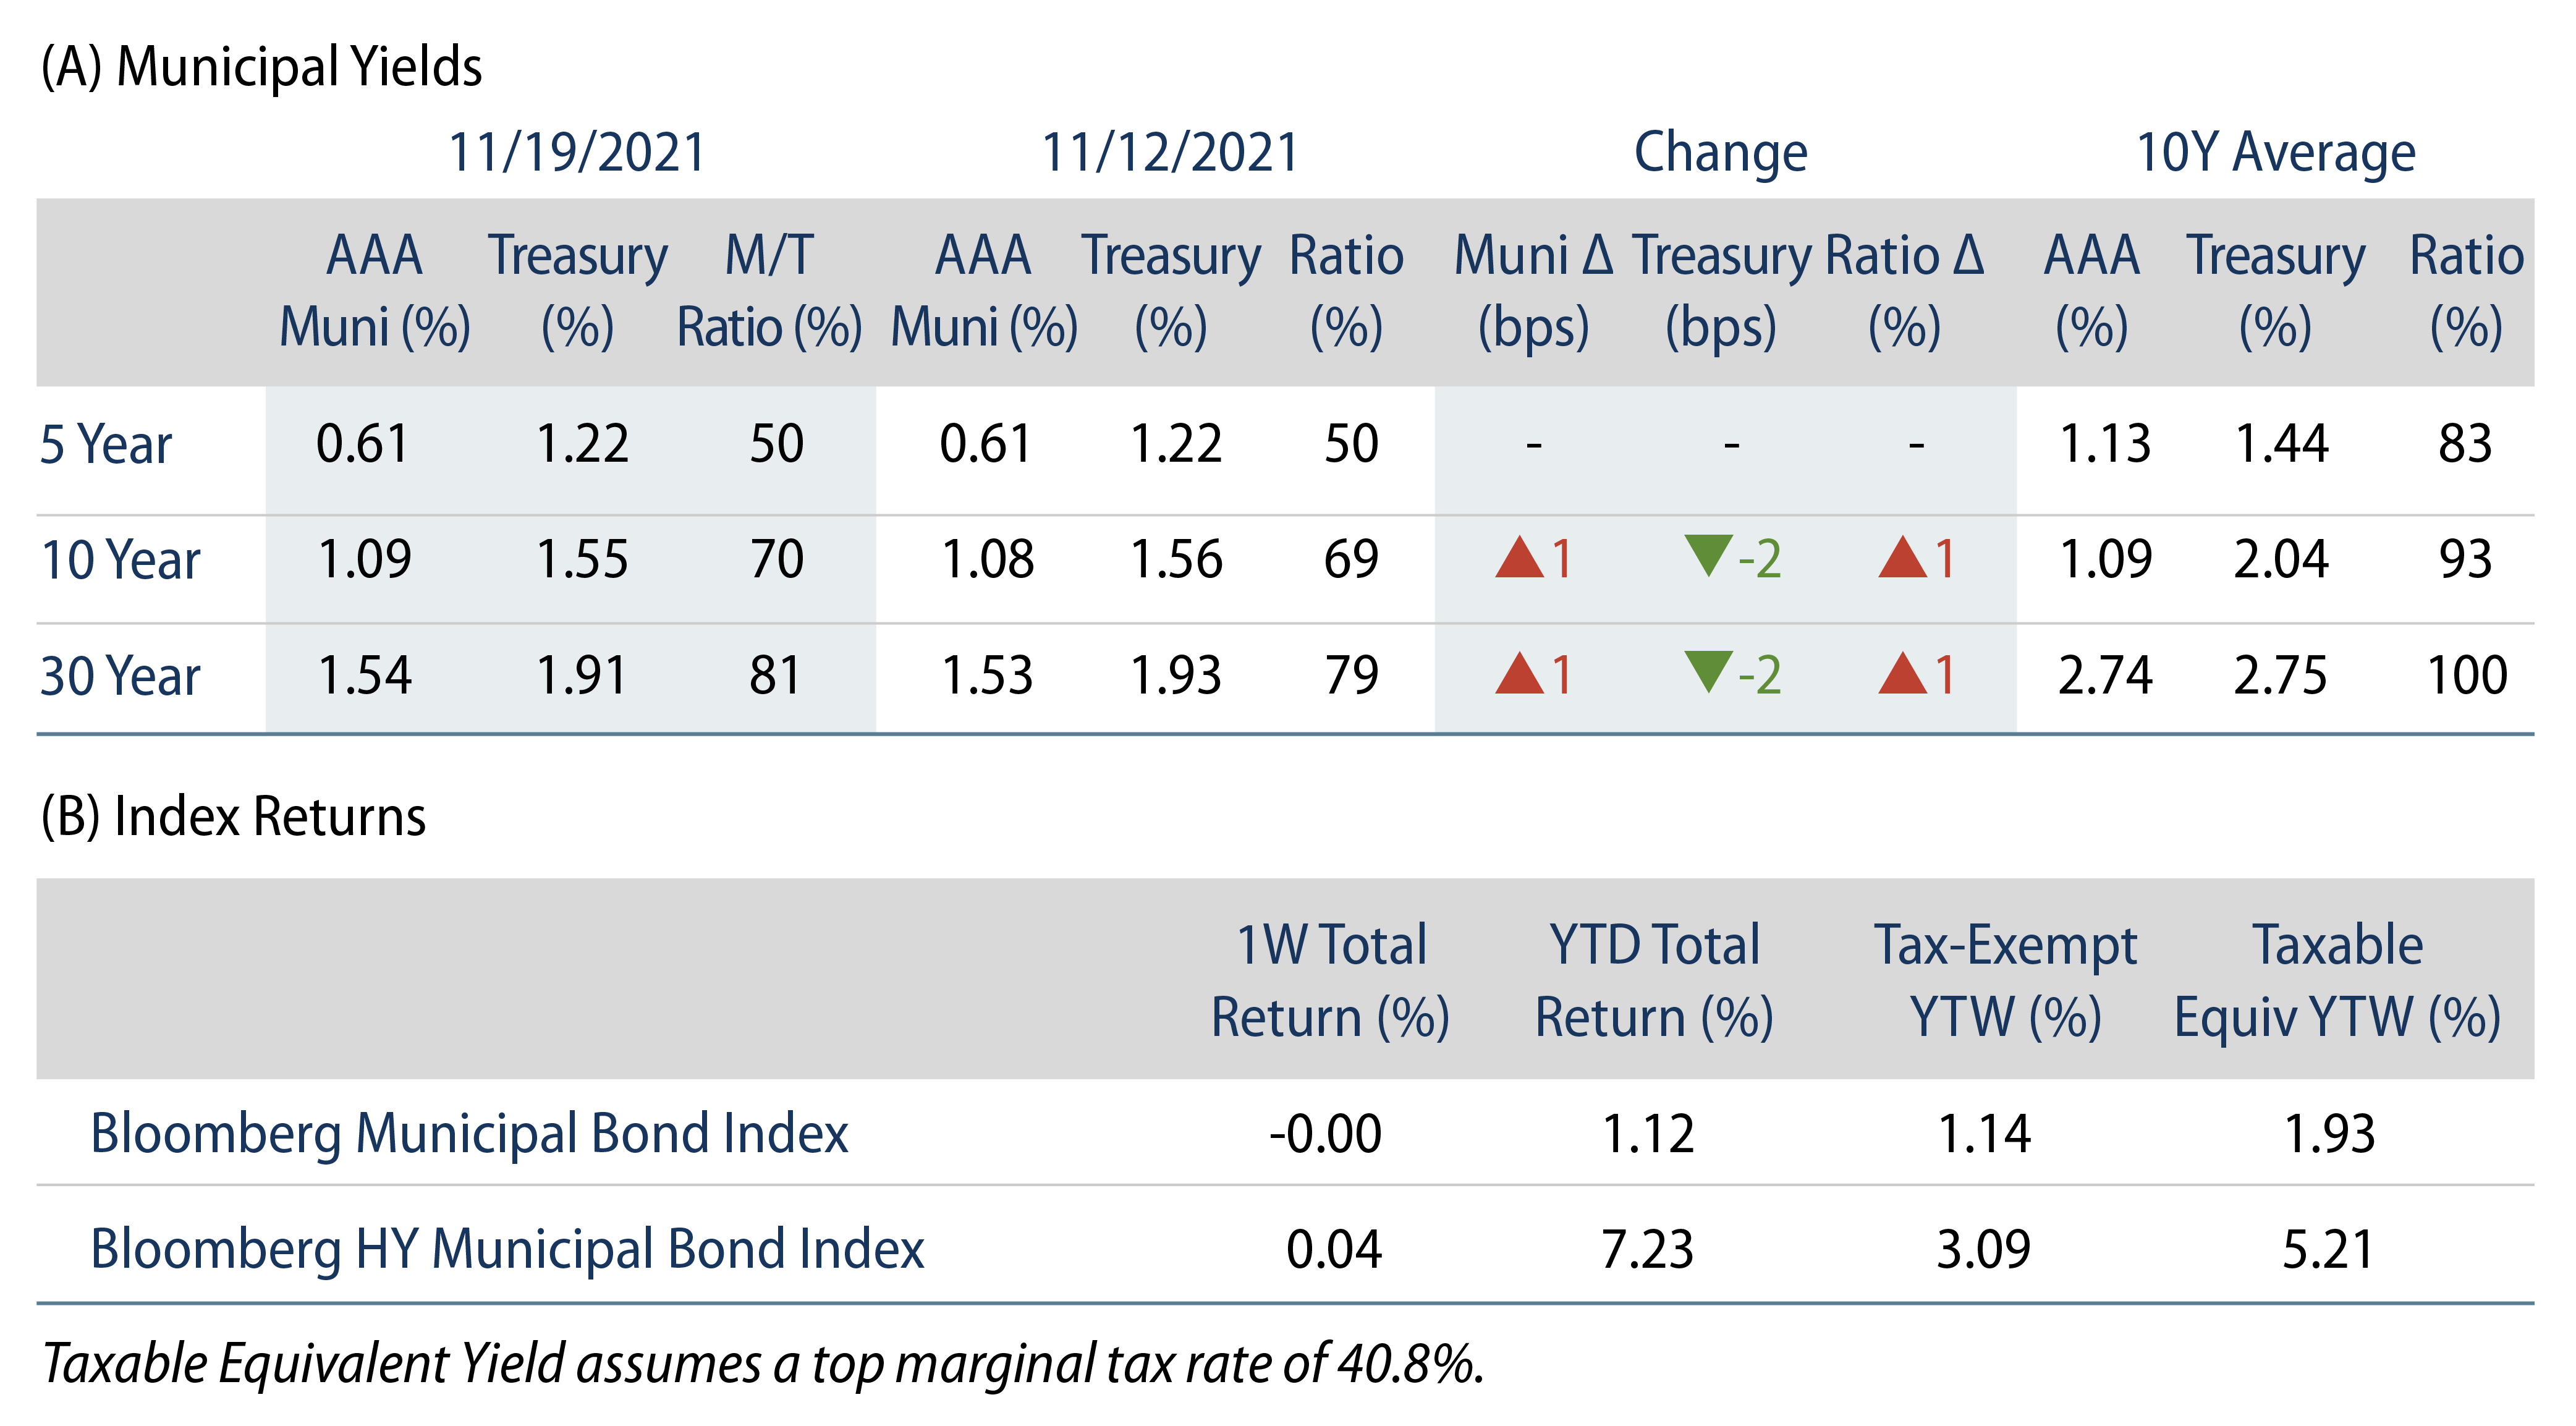 Municipal Bond Yields and Index Returns